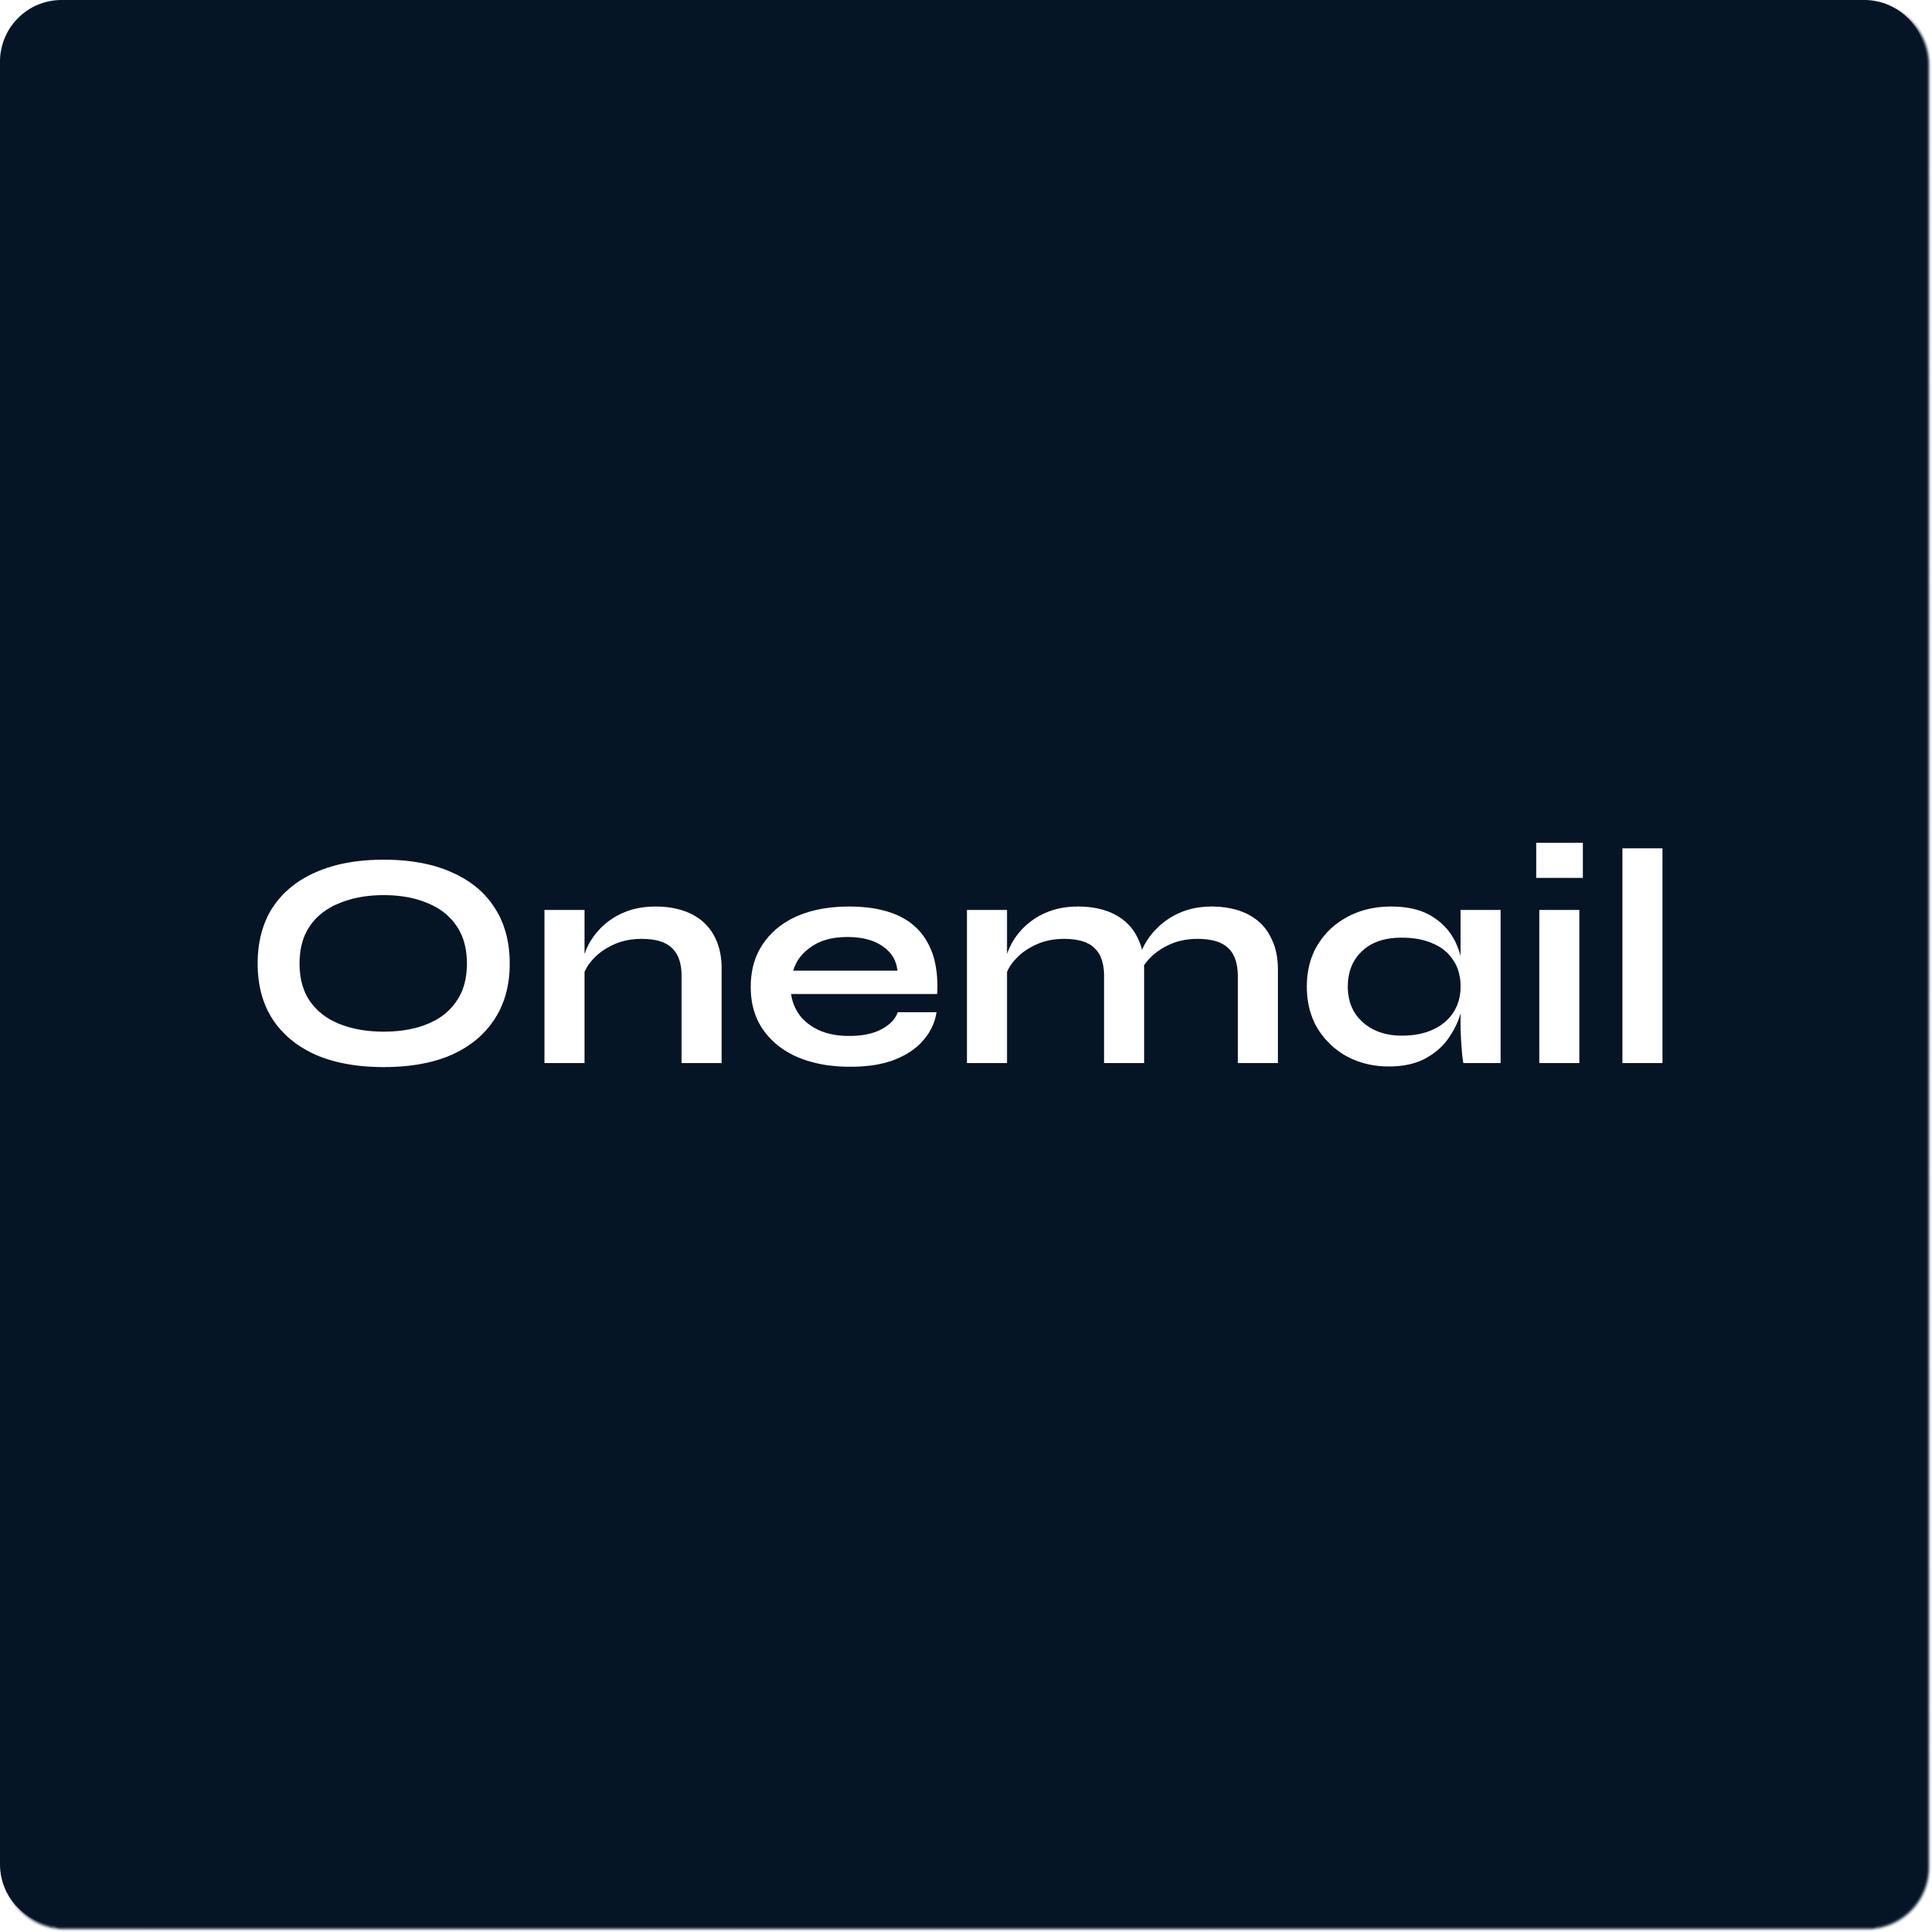 Onemail logo